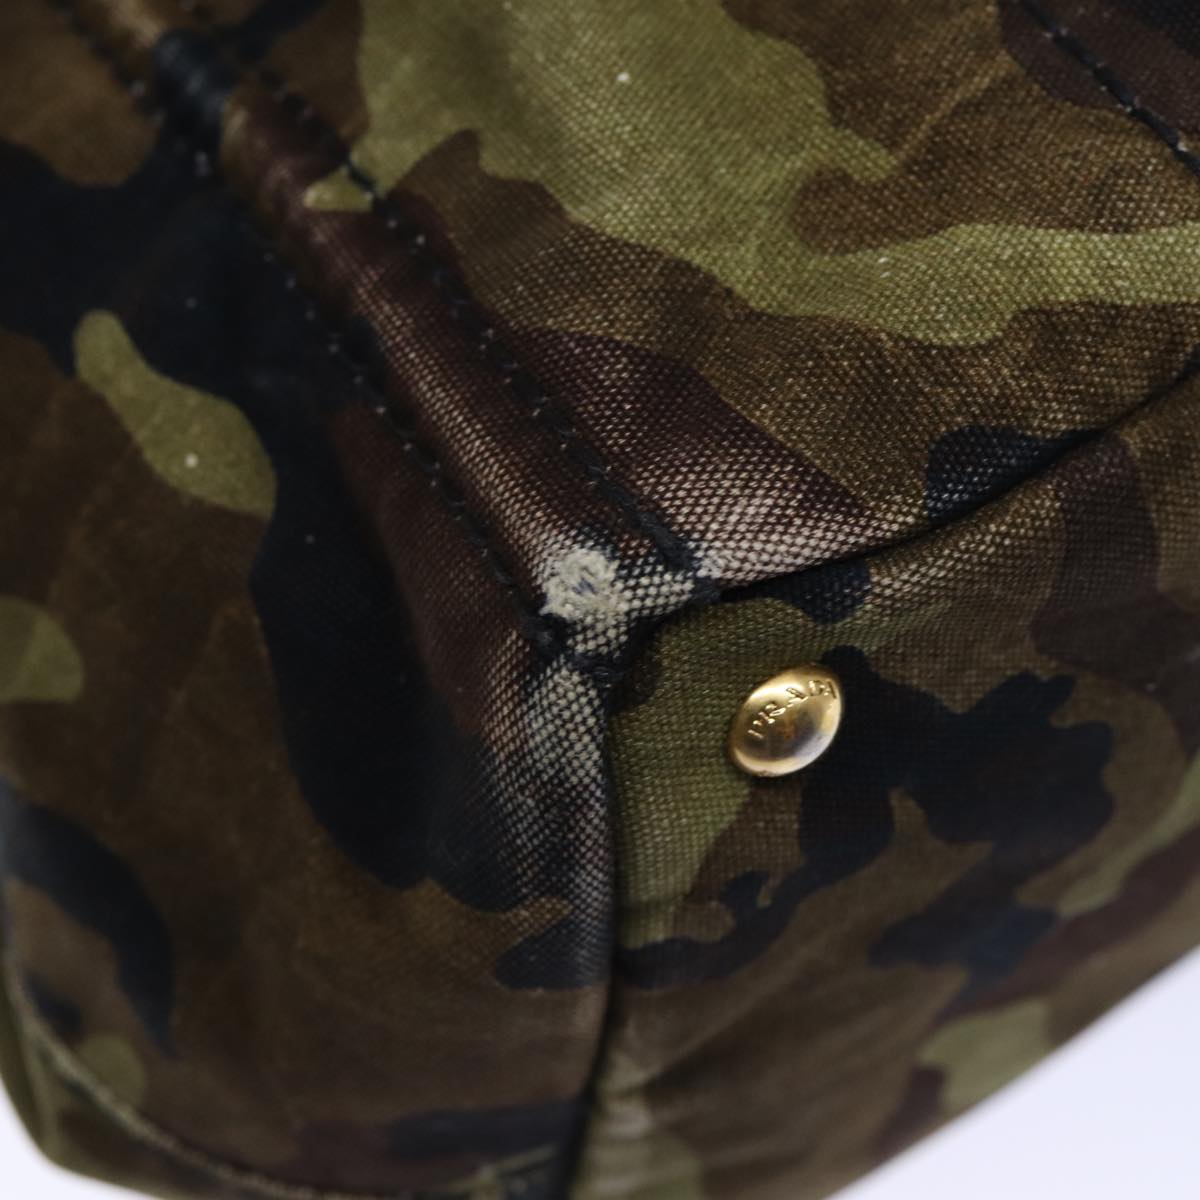 PRADA Camouflage Canapa GM Tote Bag Canvas Khaki Auth bs13781